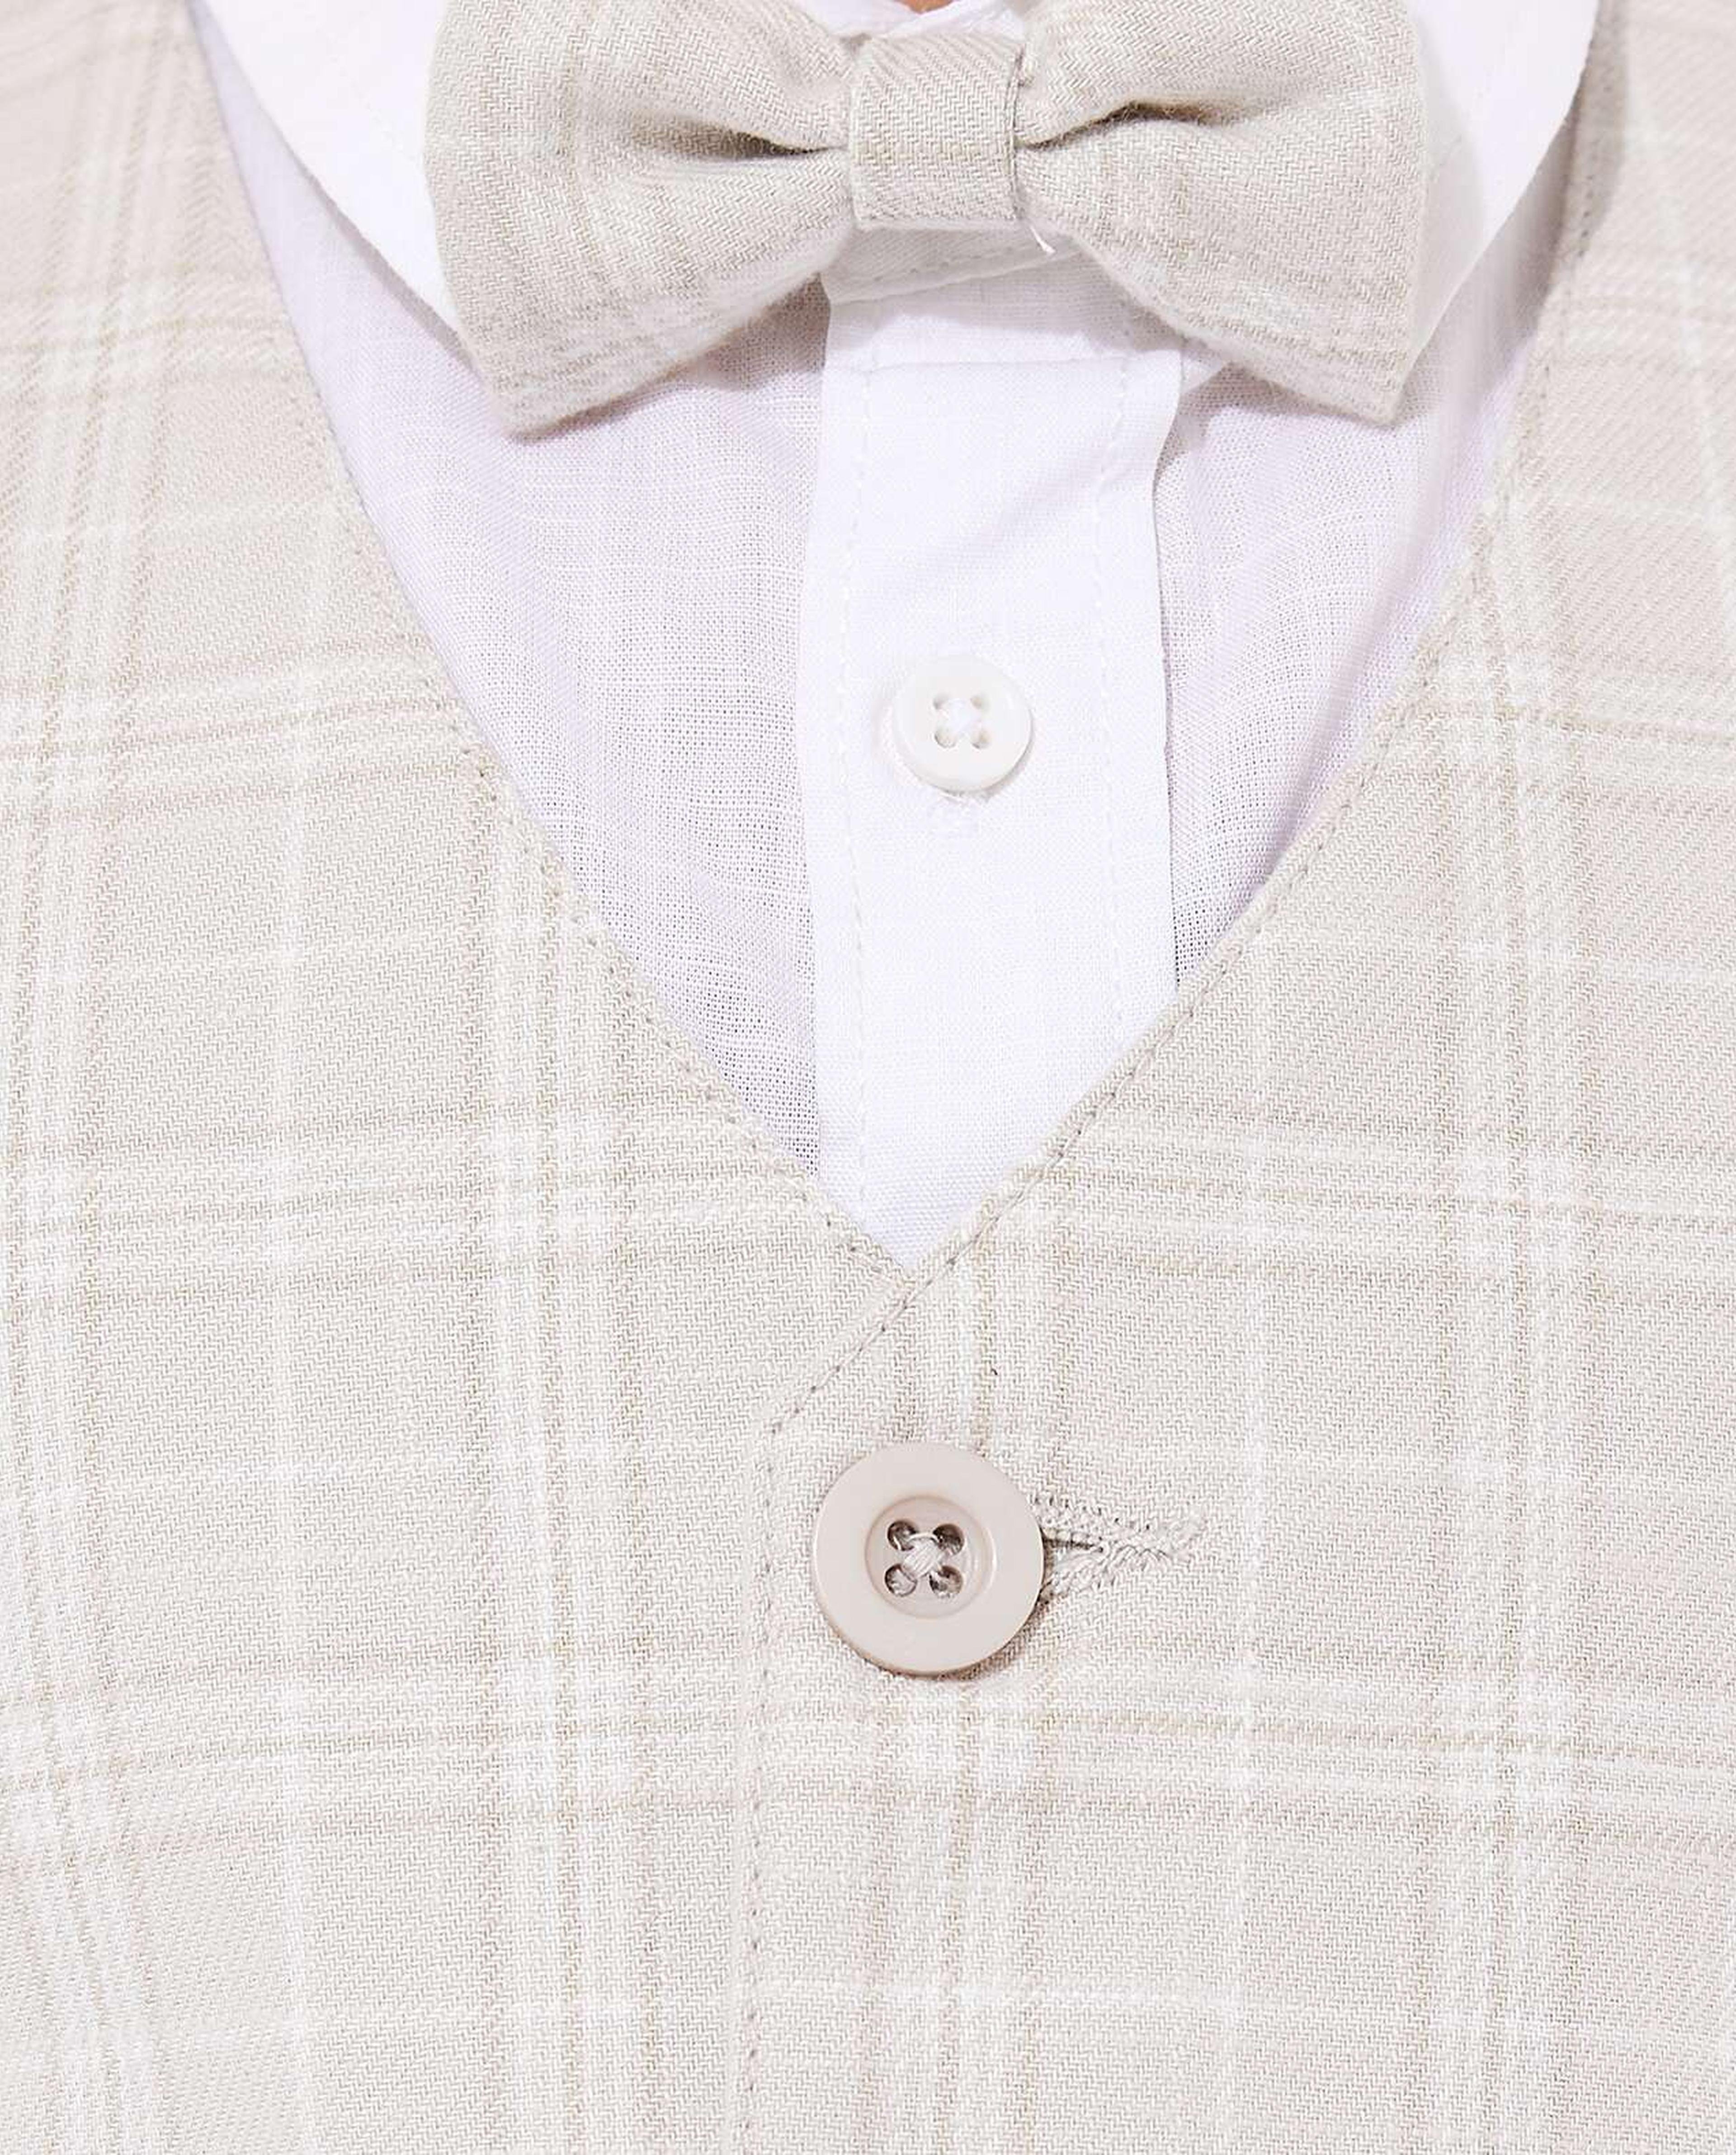 3 Piece Shirt| Waistcoat and Bow Tie Set